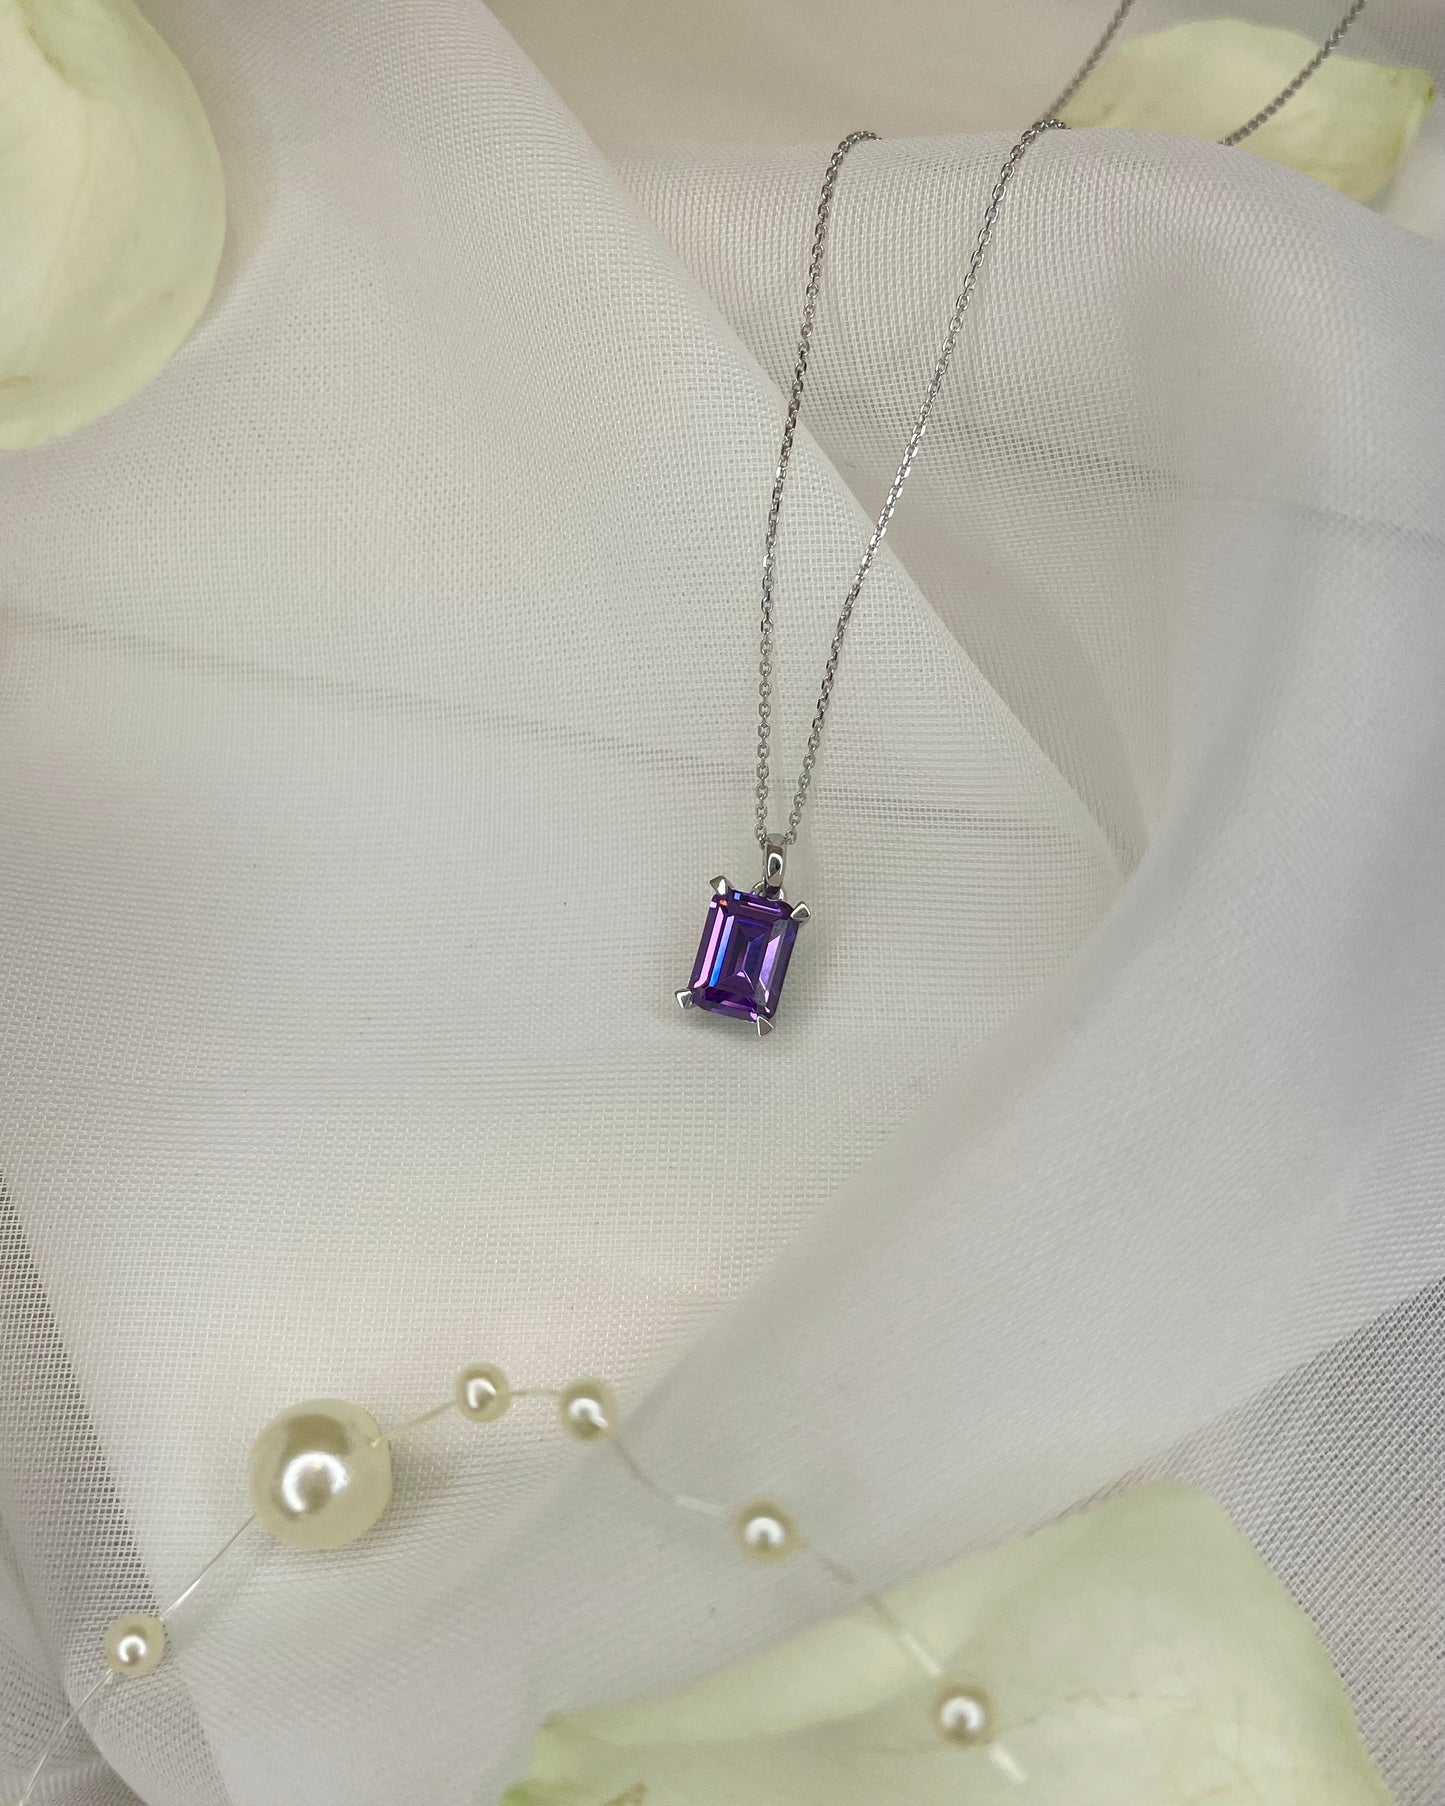 9ct White Gold purple Swarovski Crystal Pendant